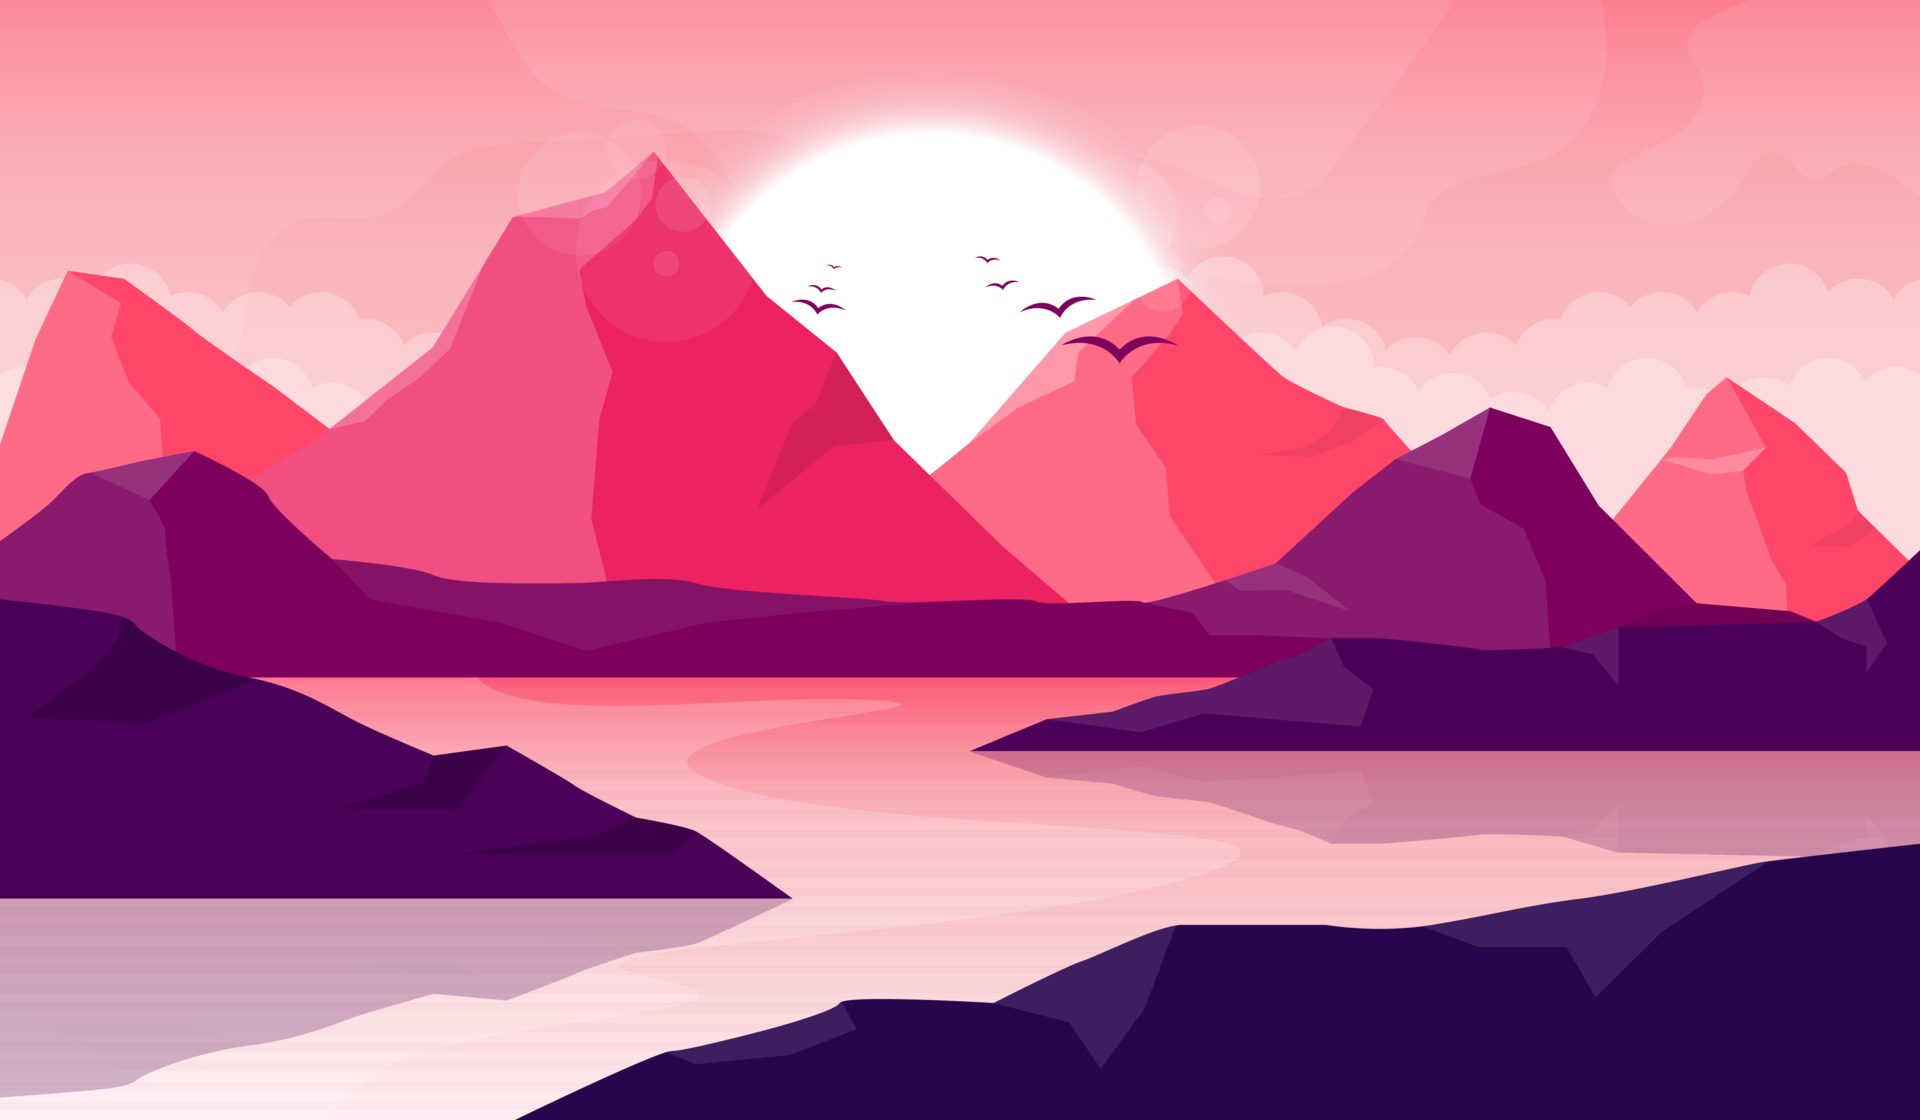 Mountain beautiful landscape background vector design illustration ...